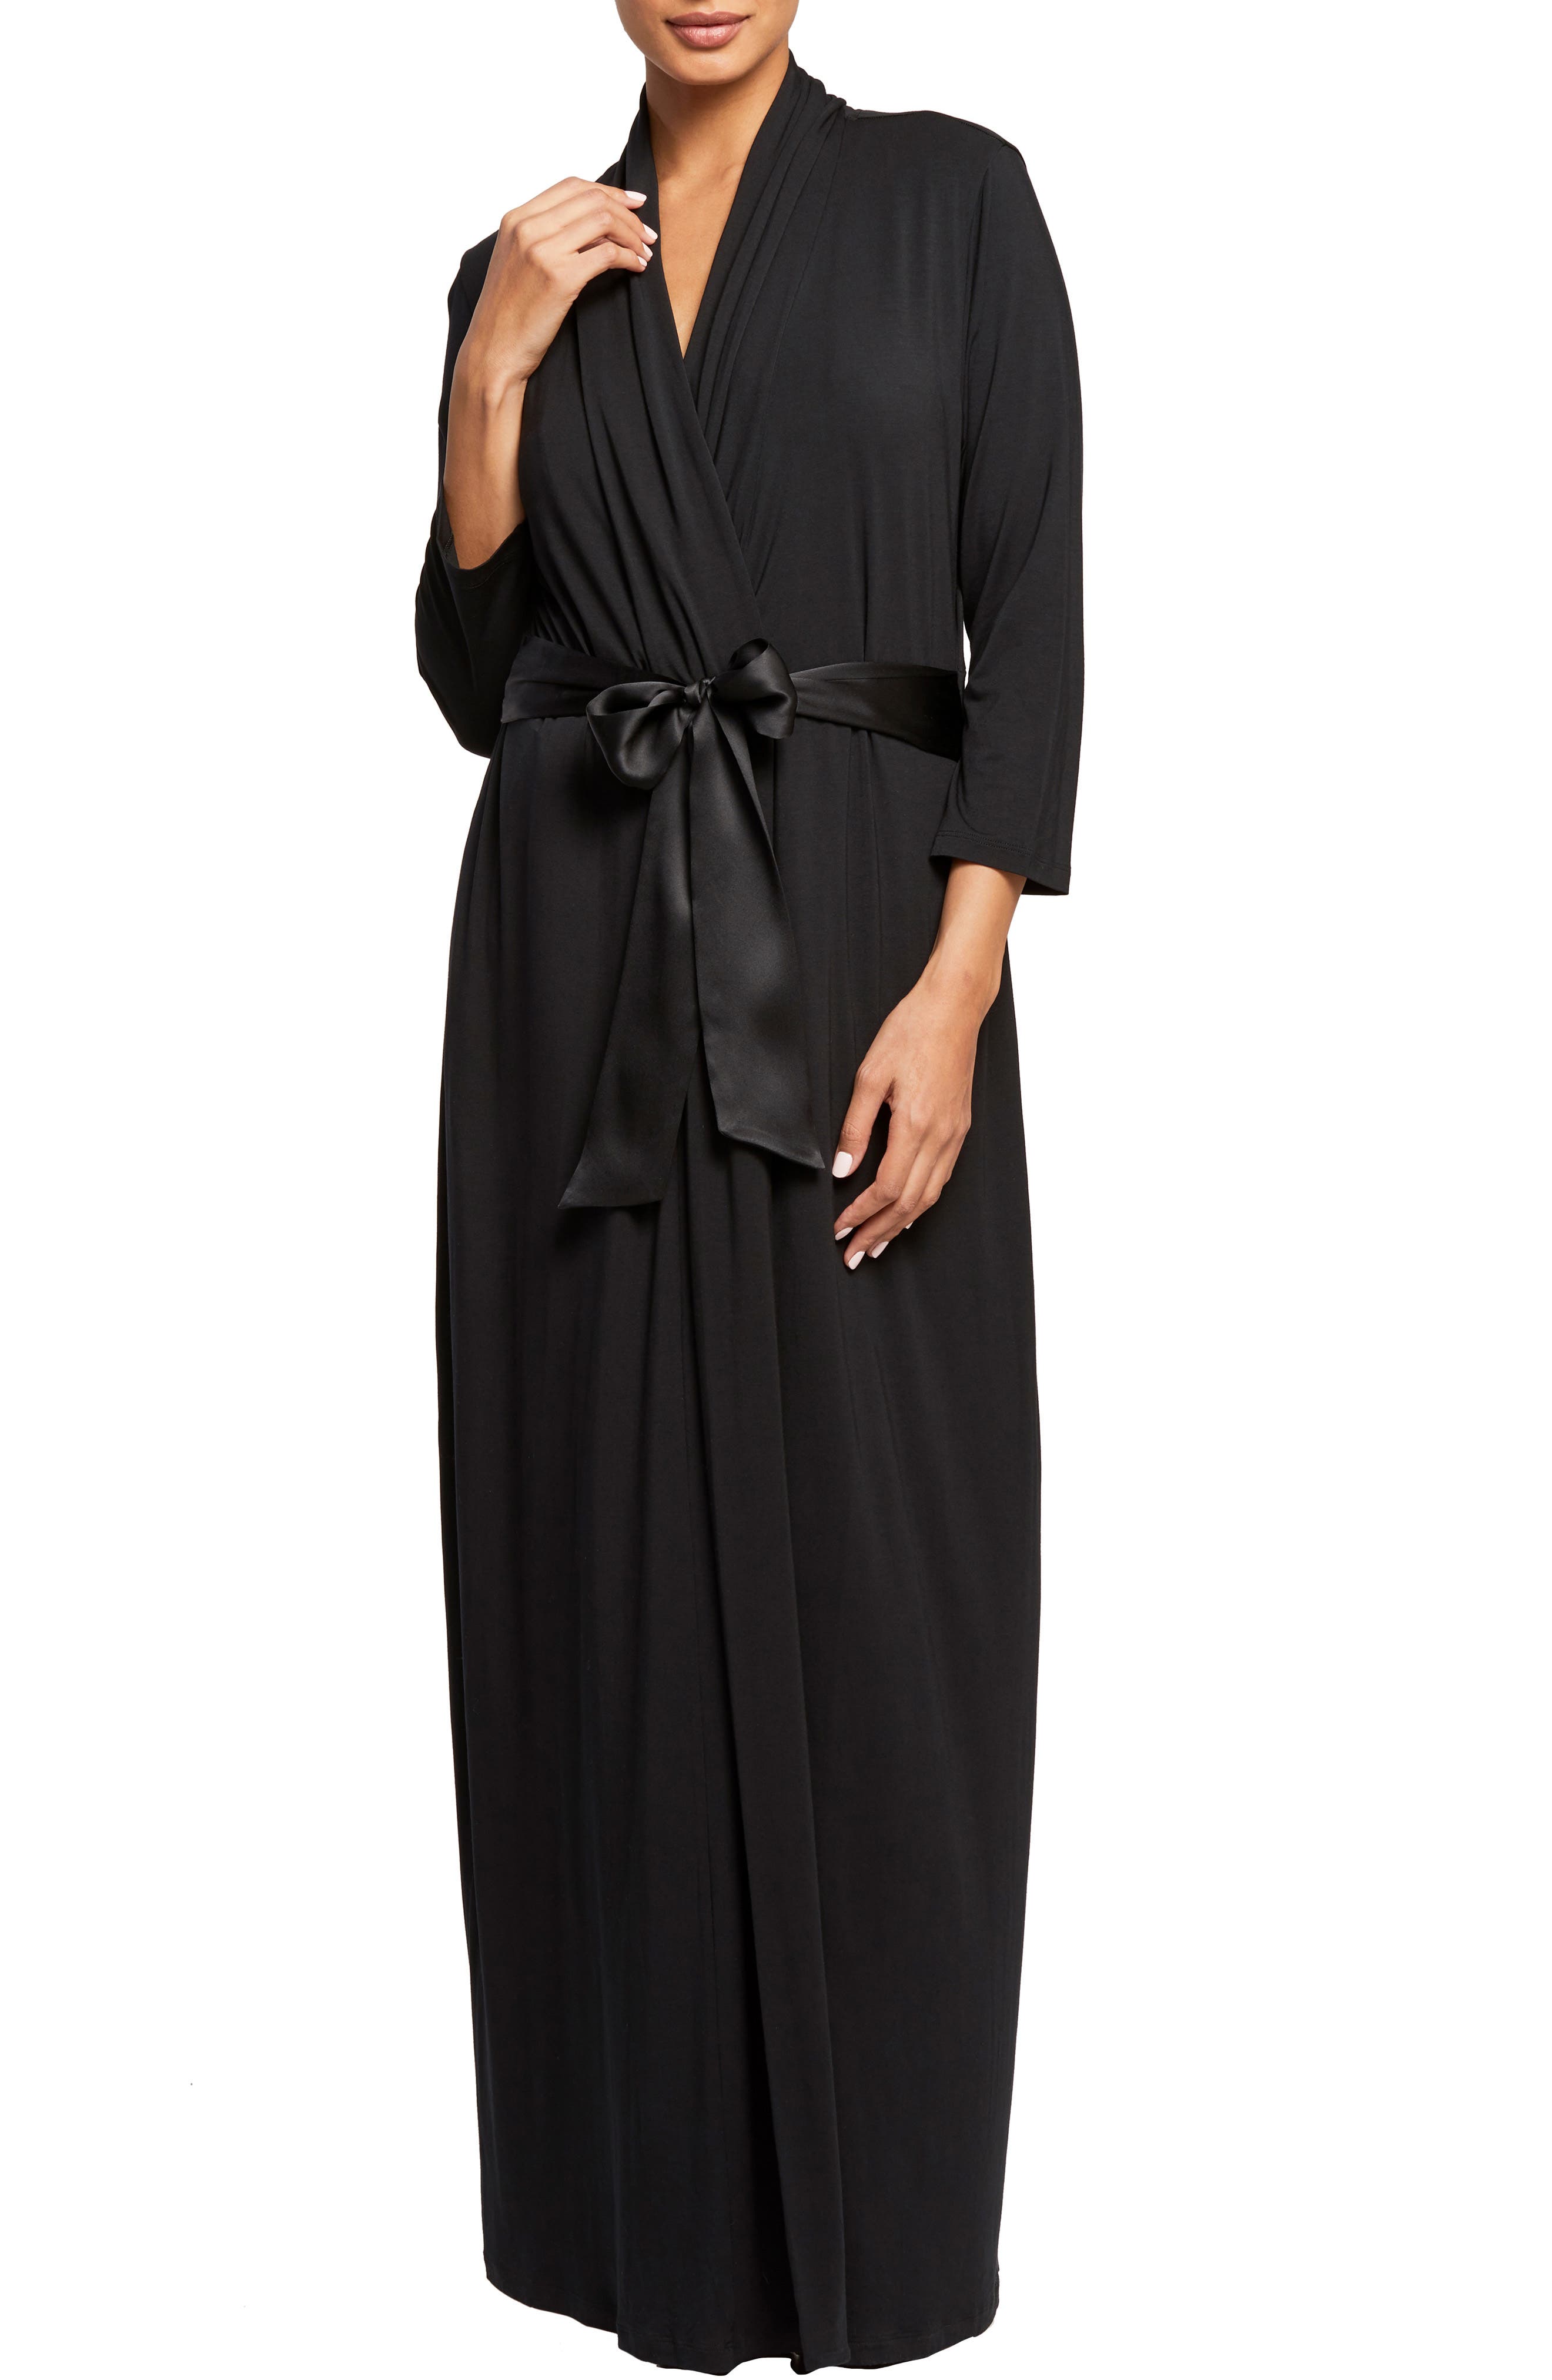 Stretch rose fuchsia jersey-dark robe fabric-free P&P